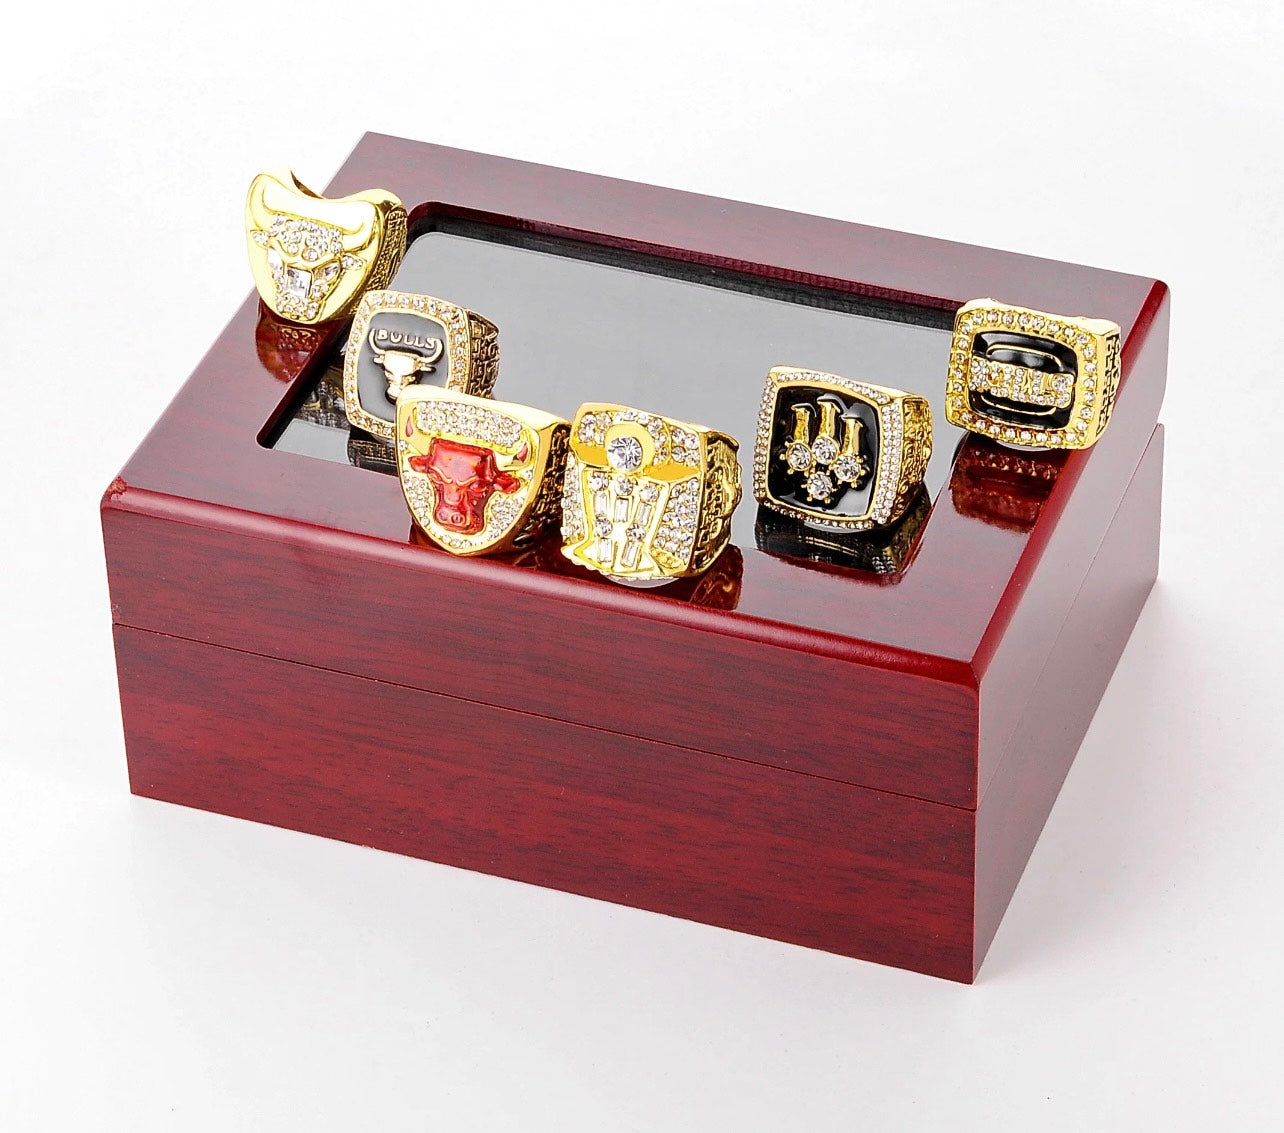 Jewelry Company Selling Eagles Super Bowl Replica Rings - CBS Philadelphia